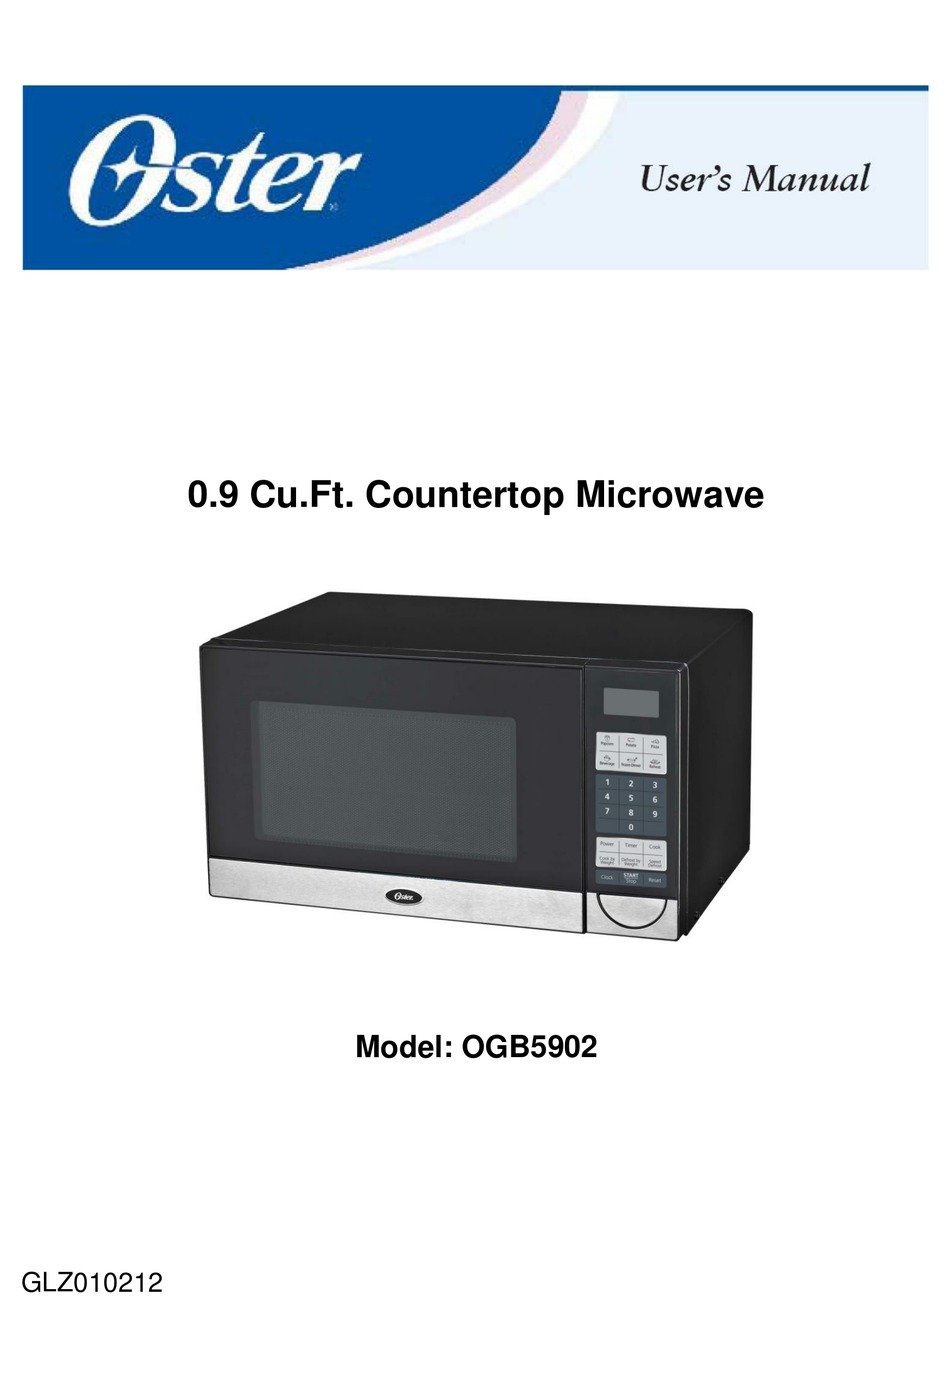 eurogas oven user manual